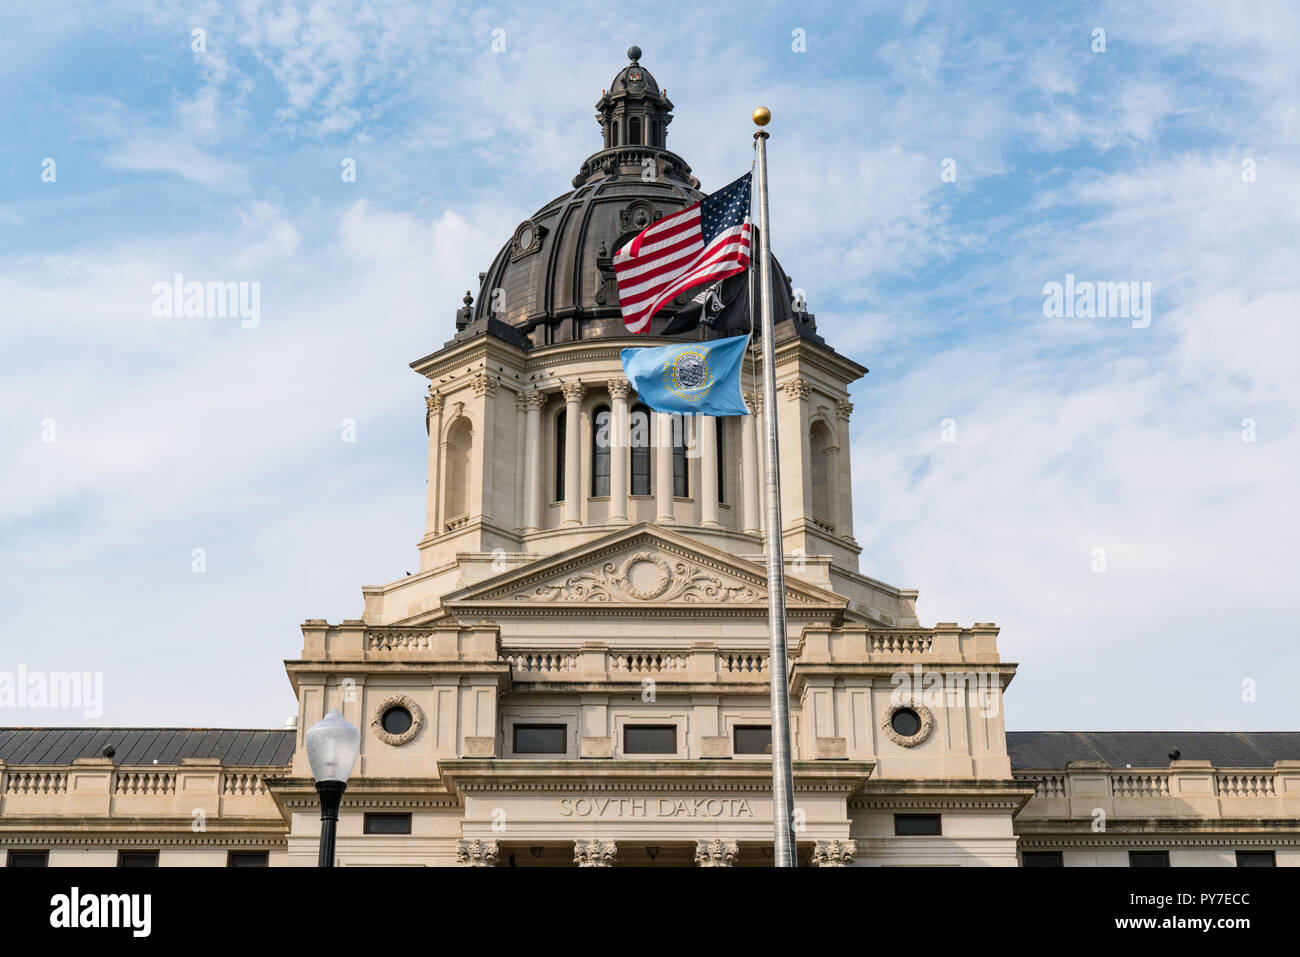 Facade of South Dakota Capital Building in Pierre, SD Stock Photo